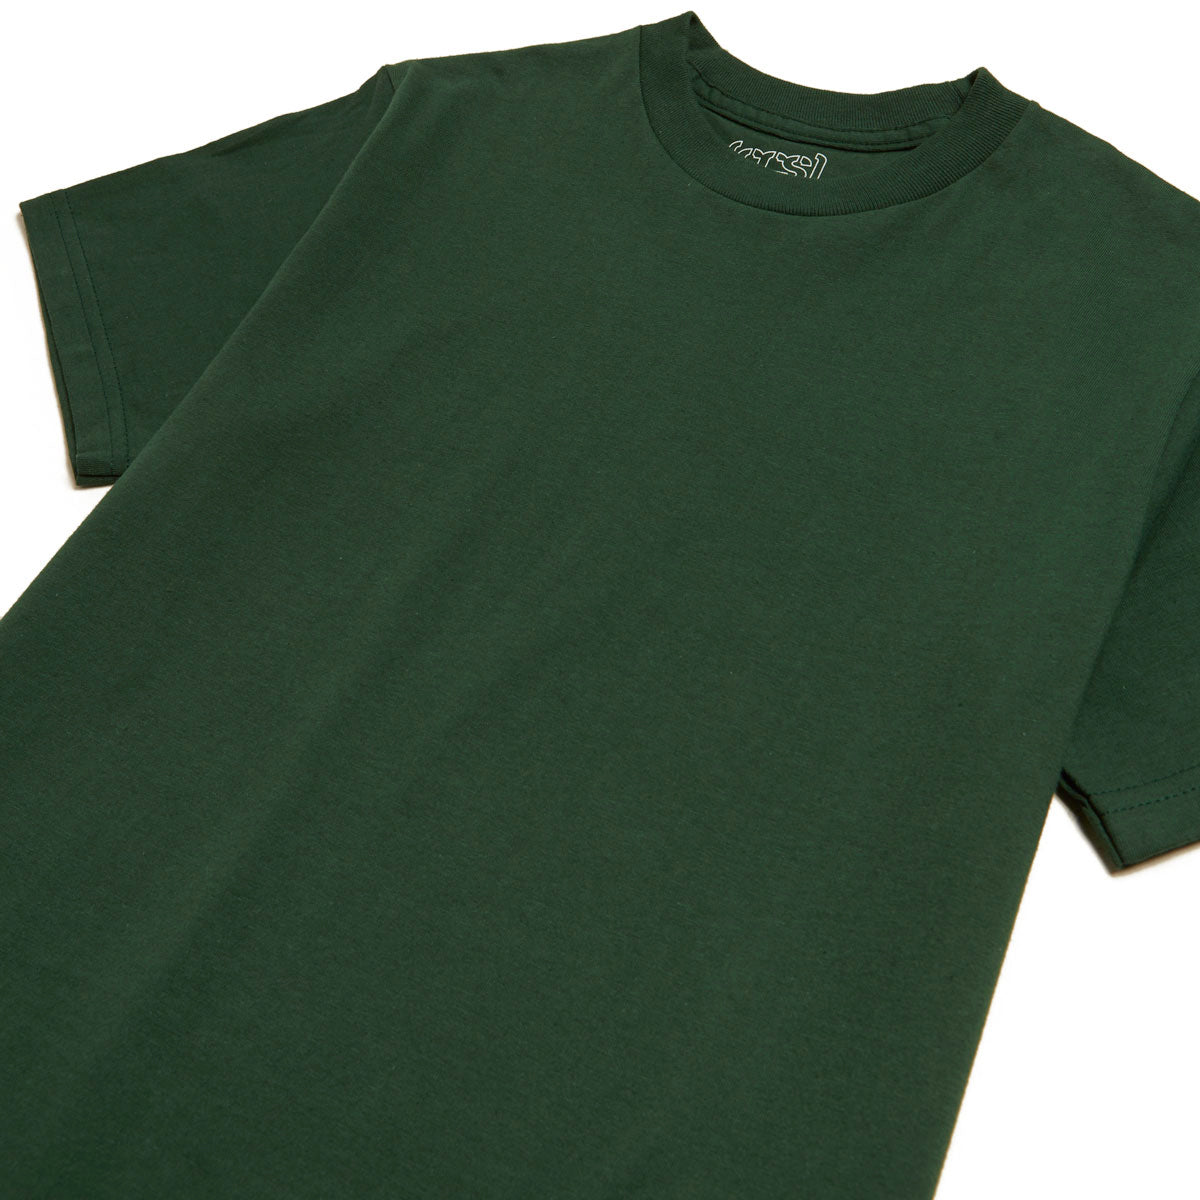 CCS Original Heavyweight T-Shirt - Dark Green image 2